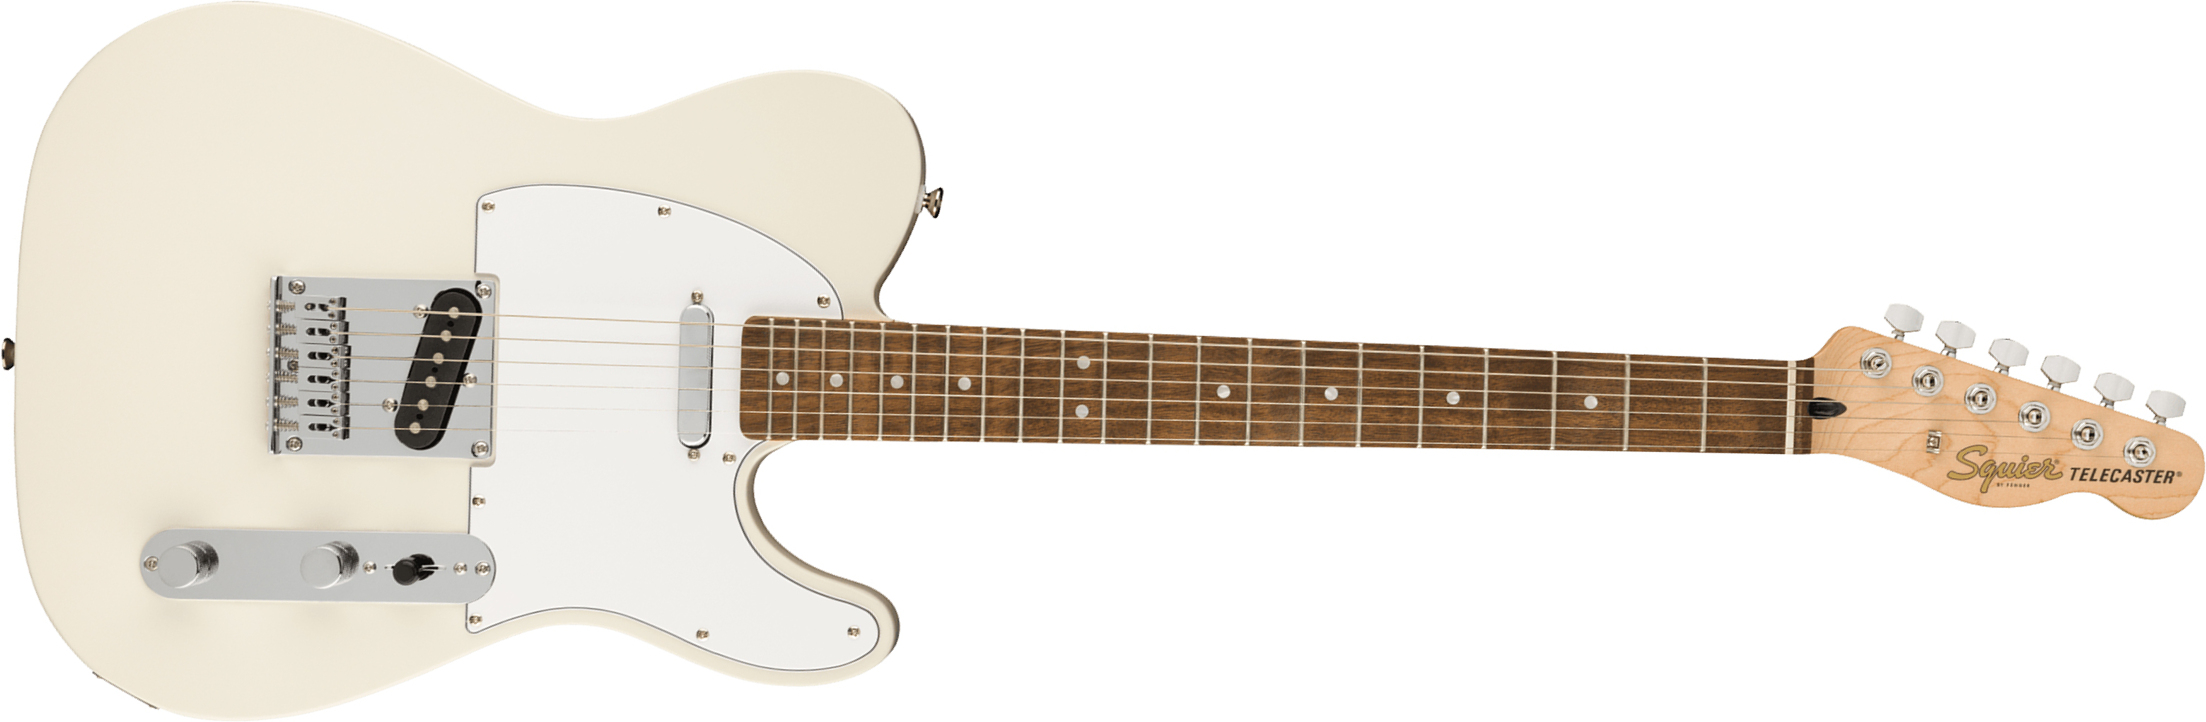 Squier Tele Affinity 2021 2s Lau - Olympic White - Televorm elektrische gitaar - Main picture